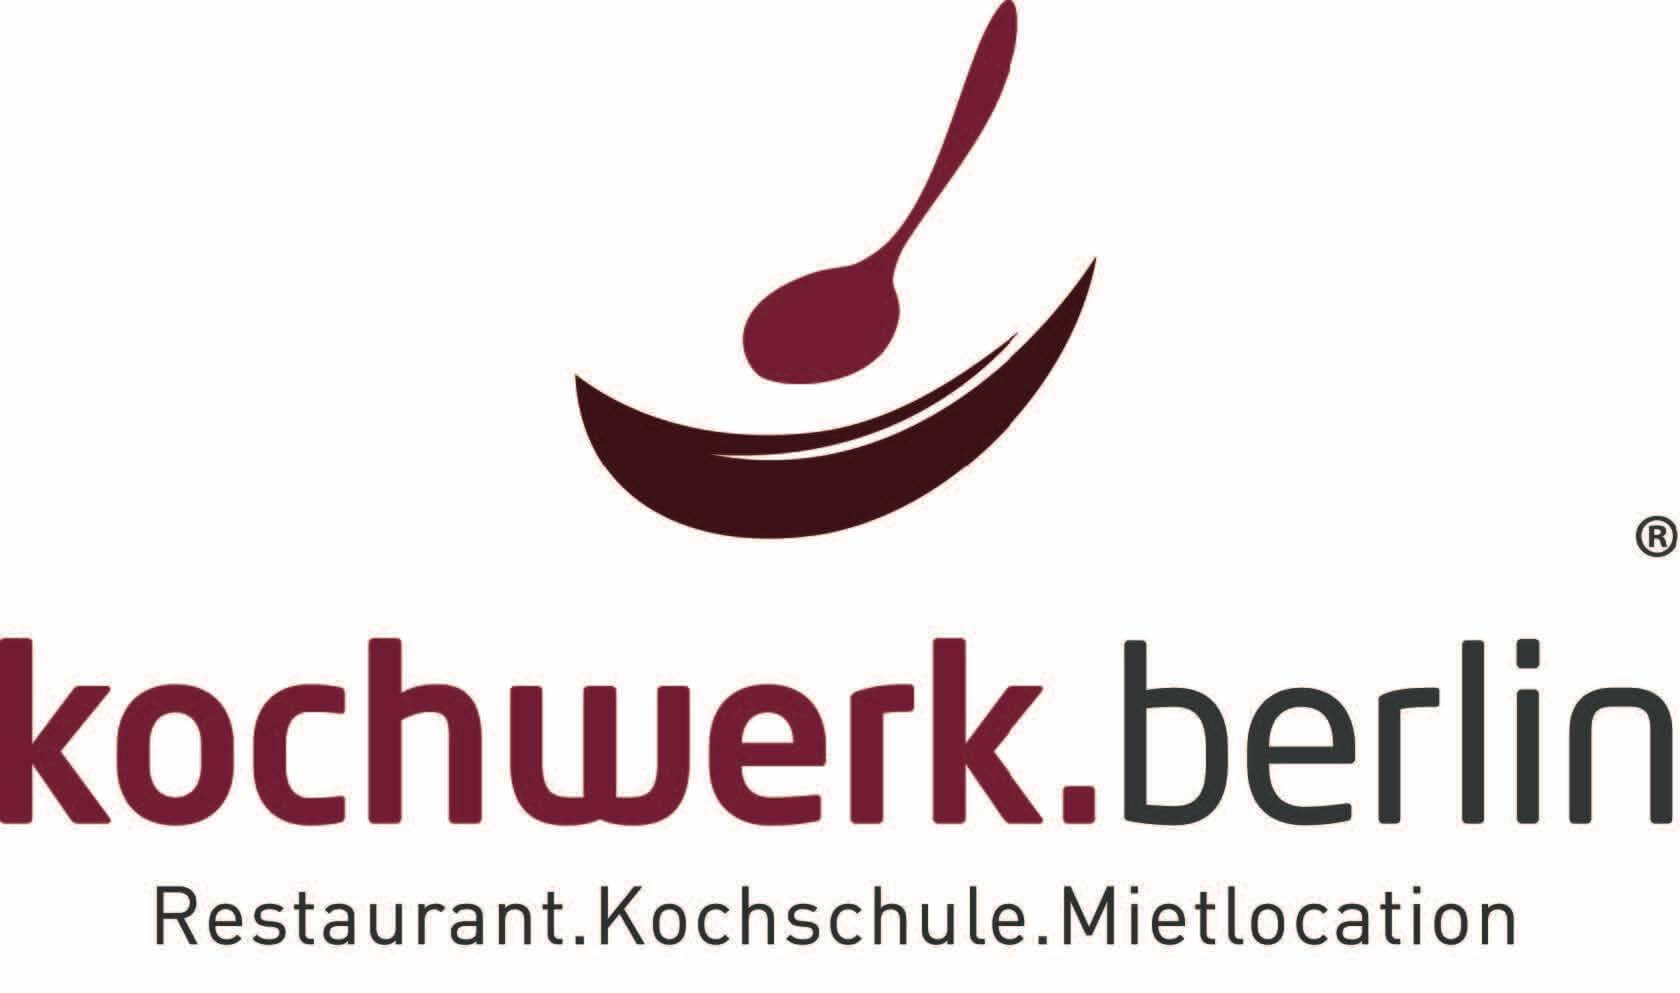 Kochwerk.Berlin - Restaurant. Kochschule. Mietlocation